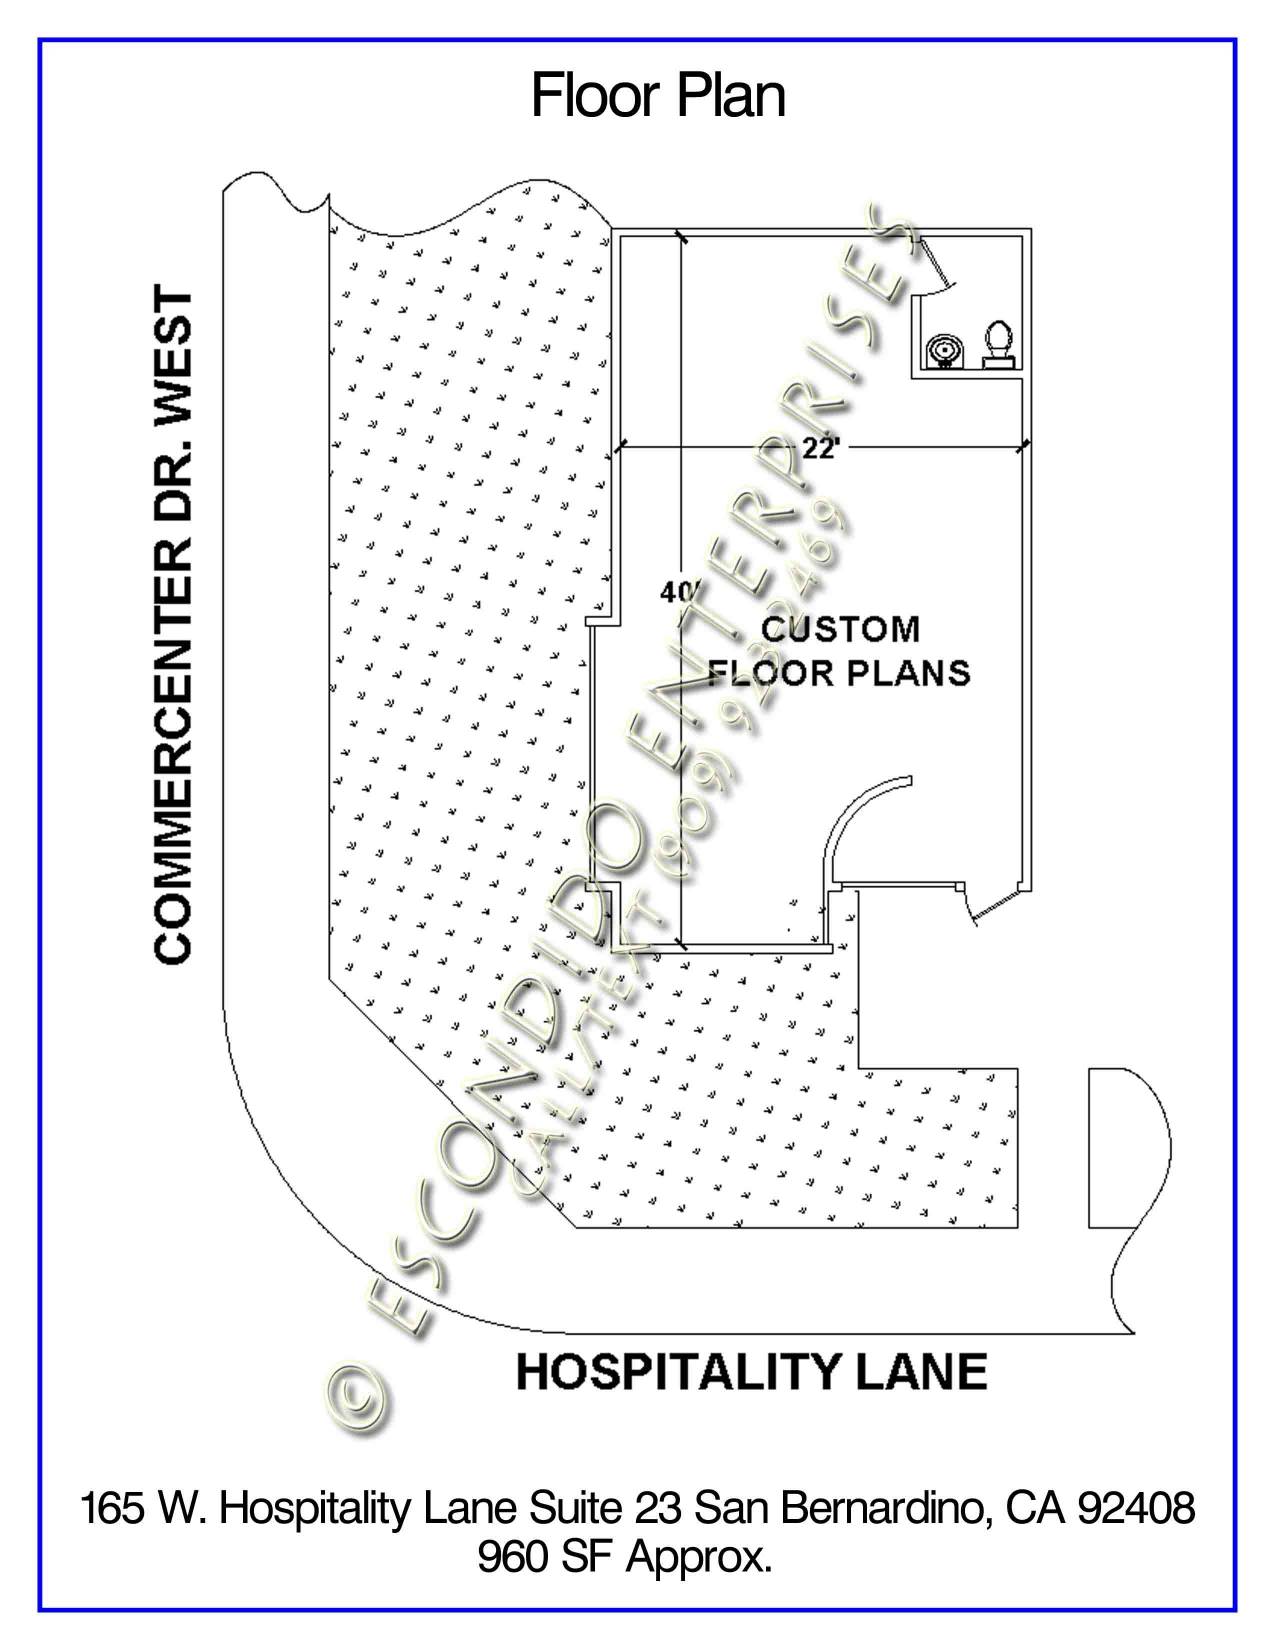 Floor plan of office space located at 165 W. Hospitality Lane, Suite 23, San Bernardino, CA 92408